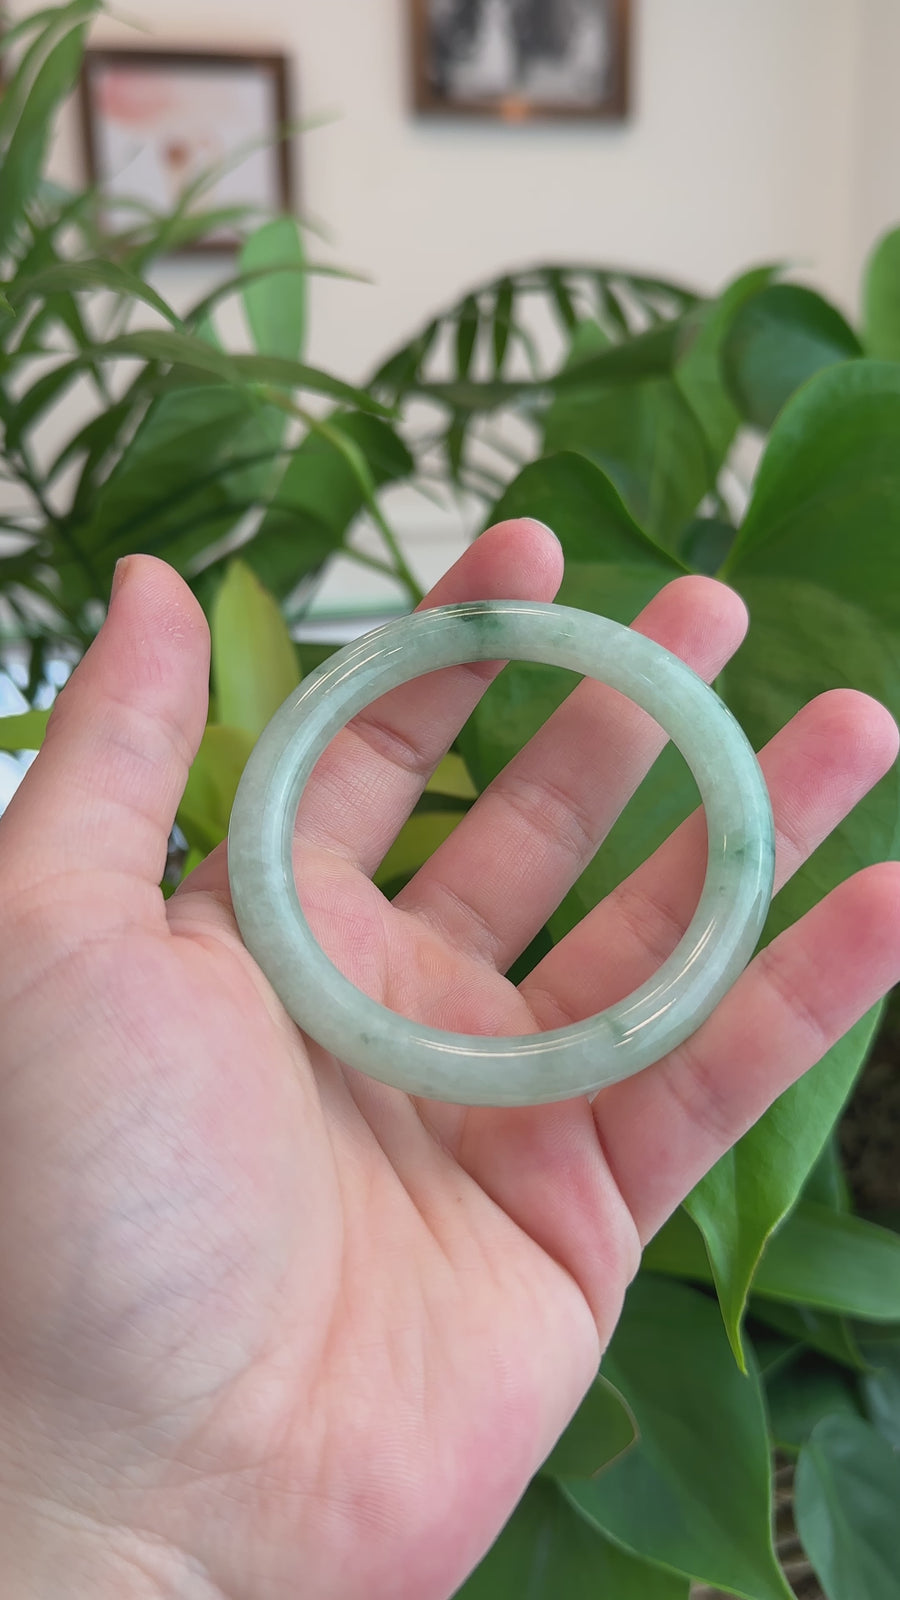 Natural Burmese Ice Blue Green Jadeite Jade Bangle Bracelet (54.76mm) #T045